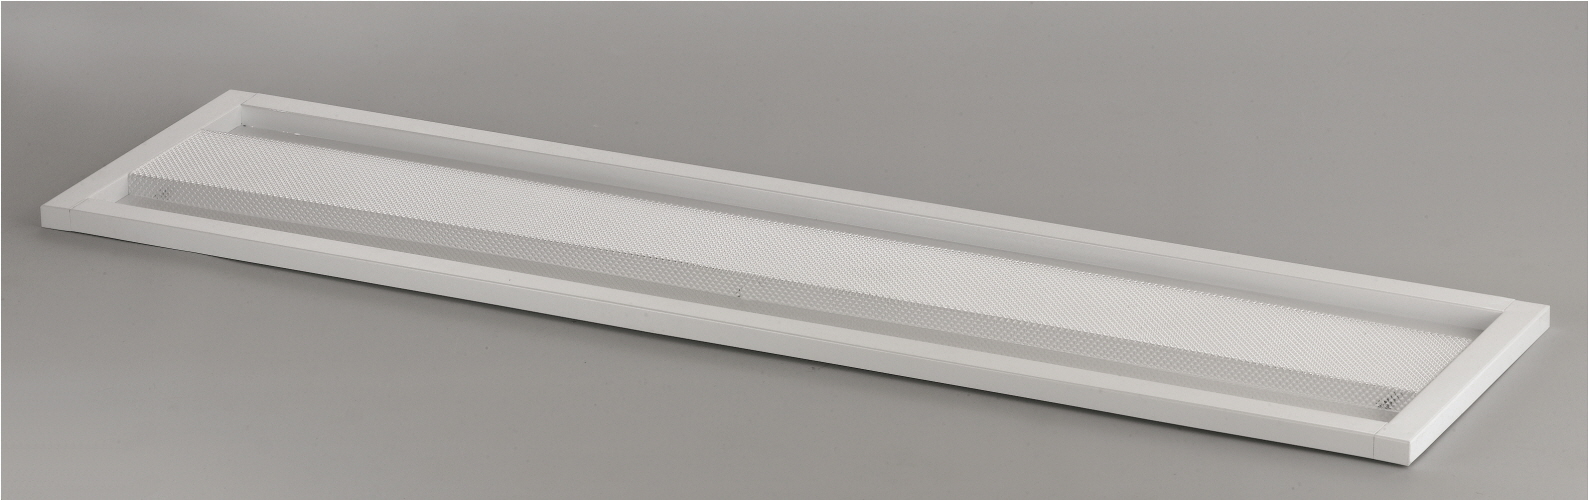 LED Panel Lighting 50W (Slim type)